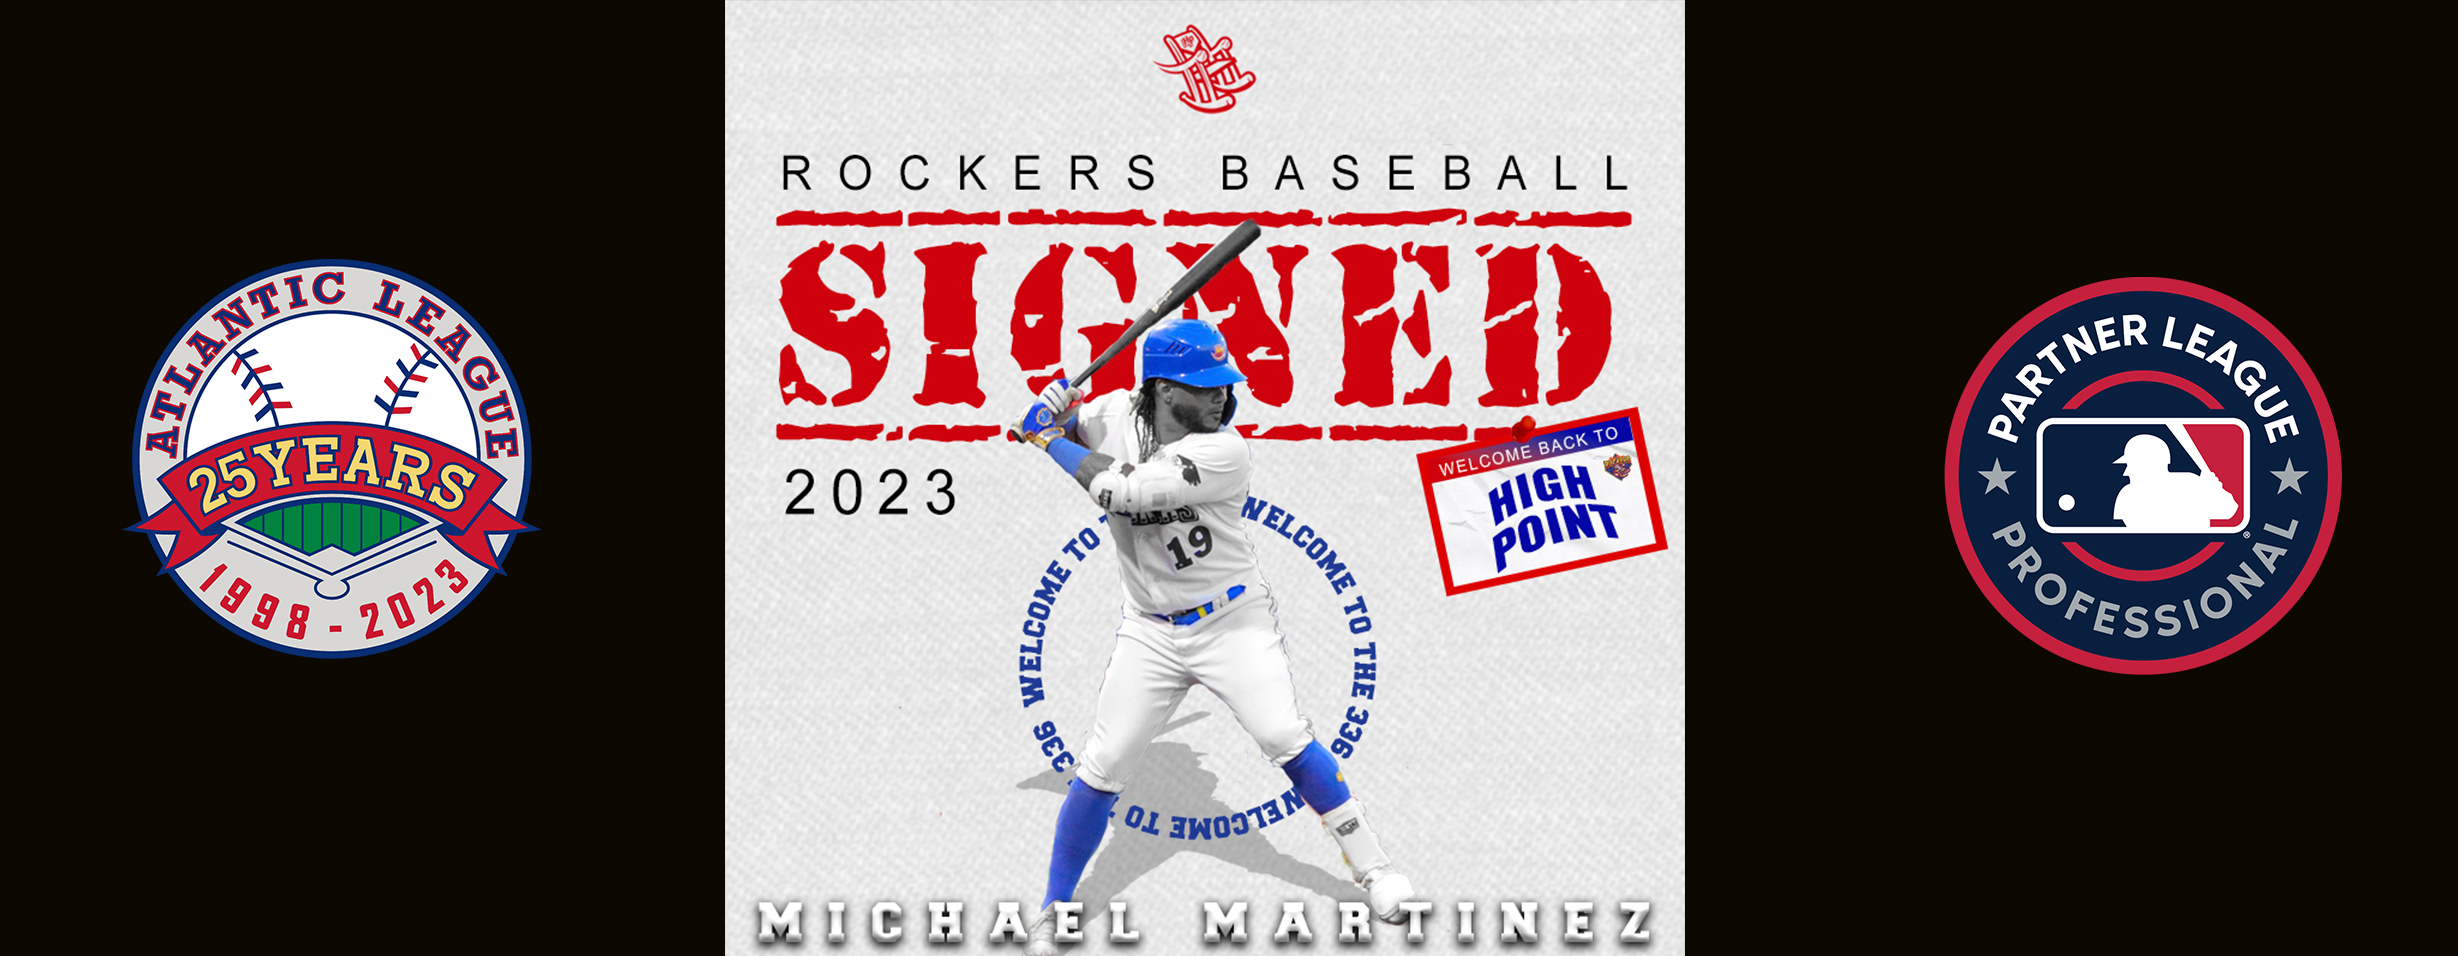 Michael Martinez  High Point Rockers Baseball